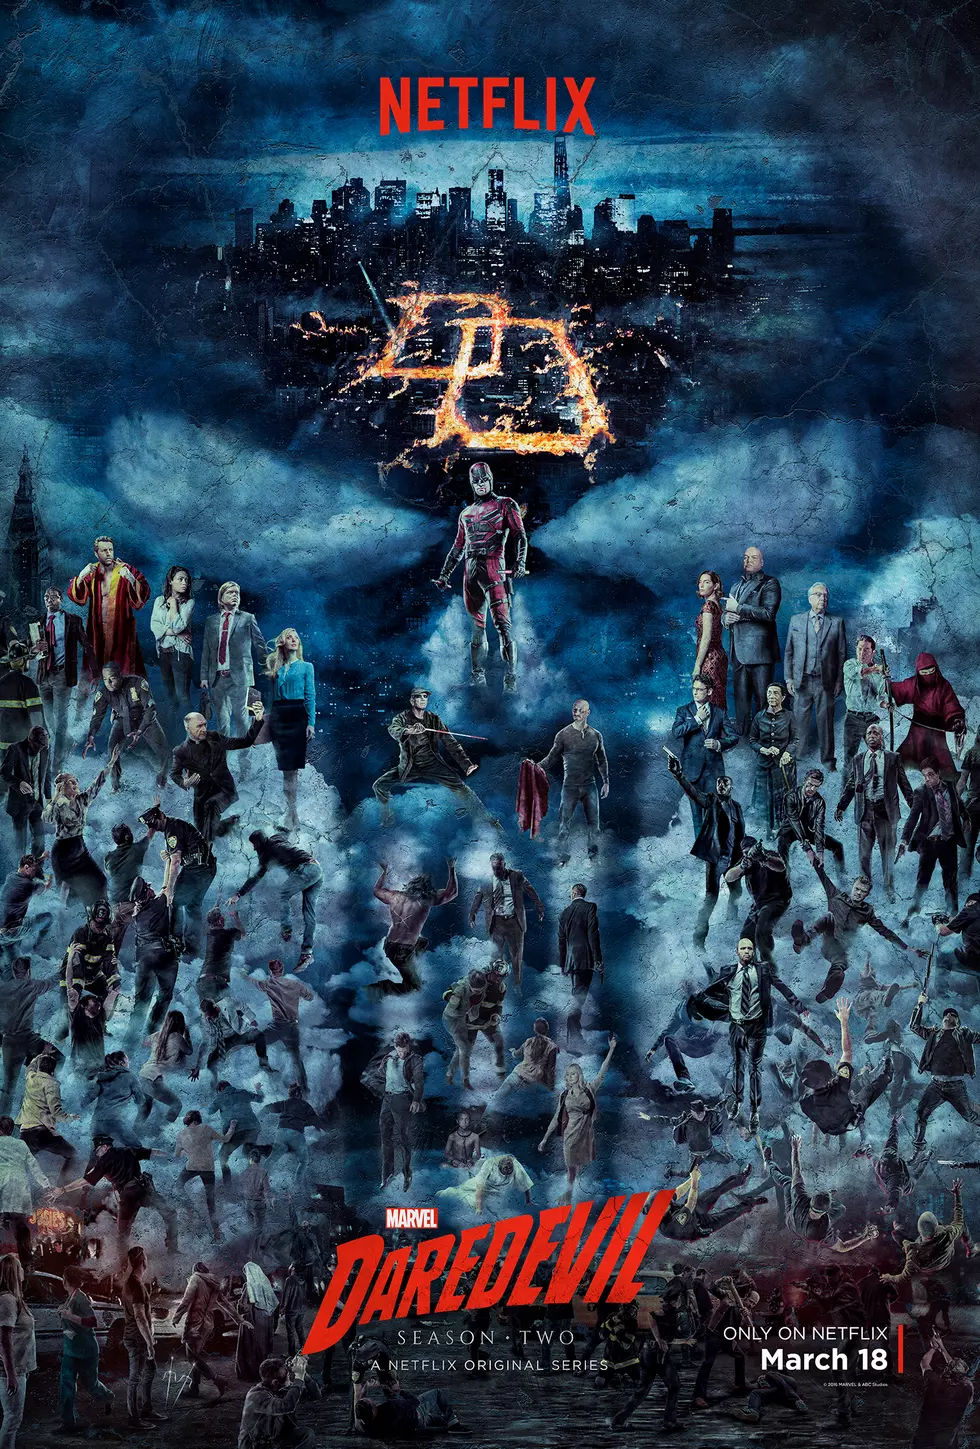 Netflix Releases New Trailer for Daredevil Season 2!